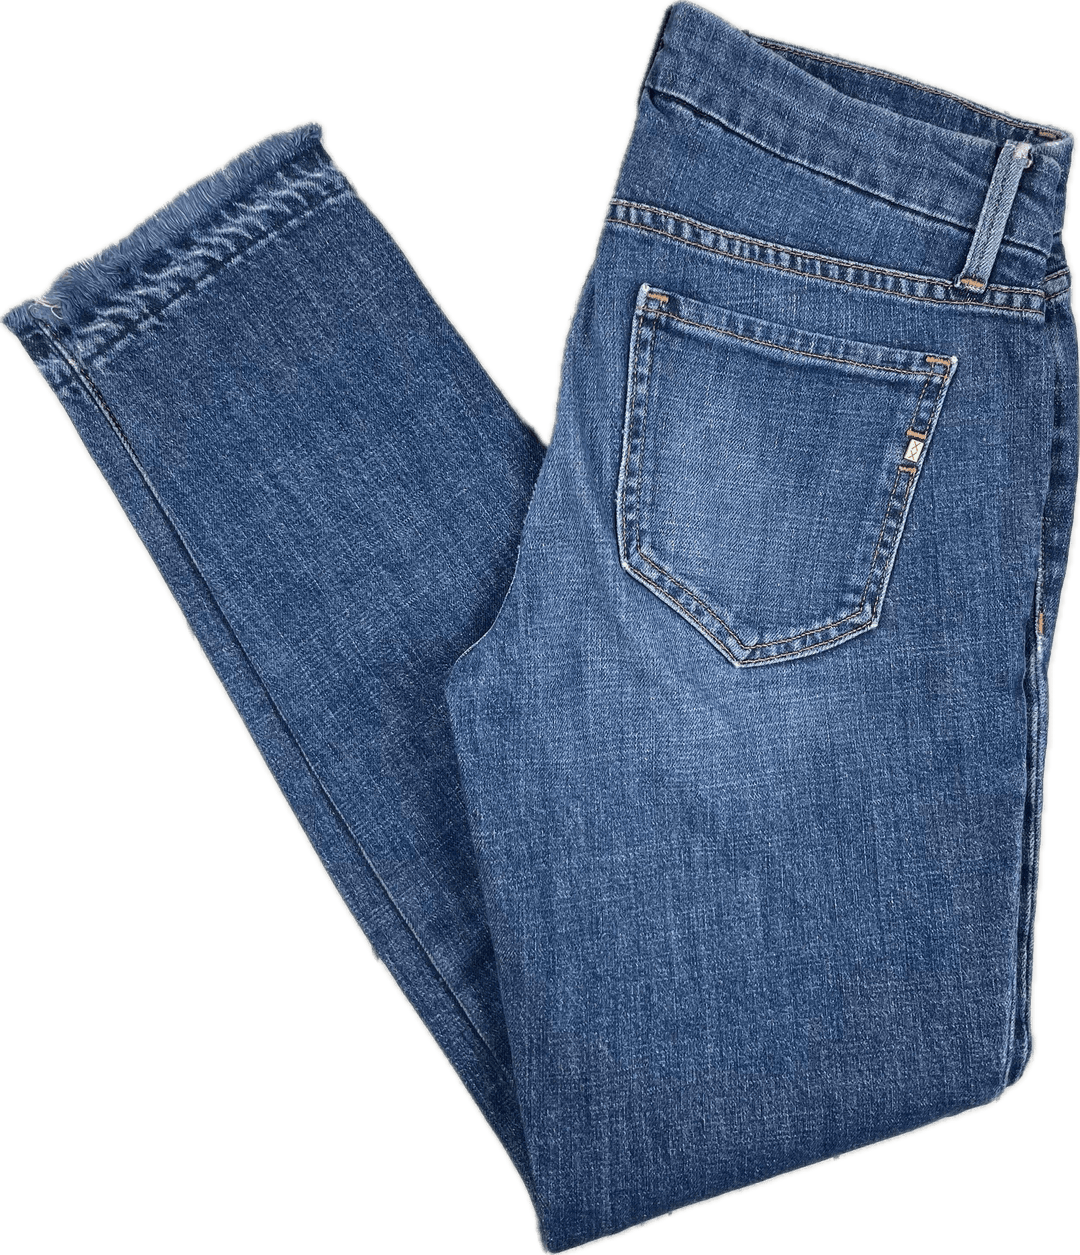 Genetic USA Made Patch Pocket 'Bardot' Jeans - Size 27 - Jean Pool